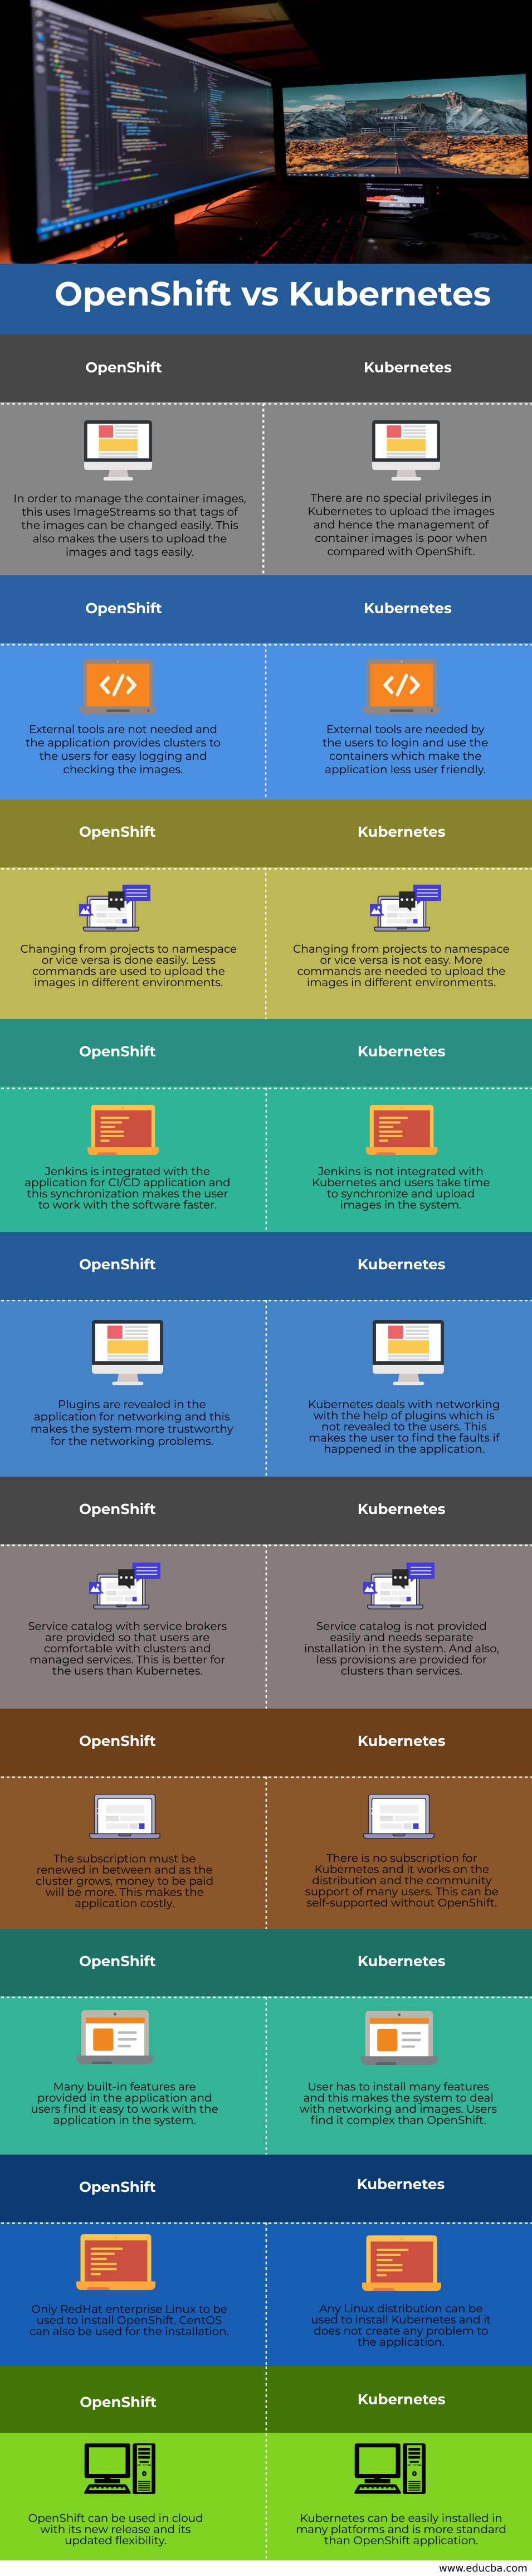 OpenShift vs Kubernetes_info